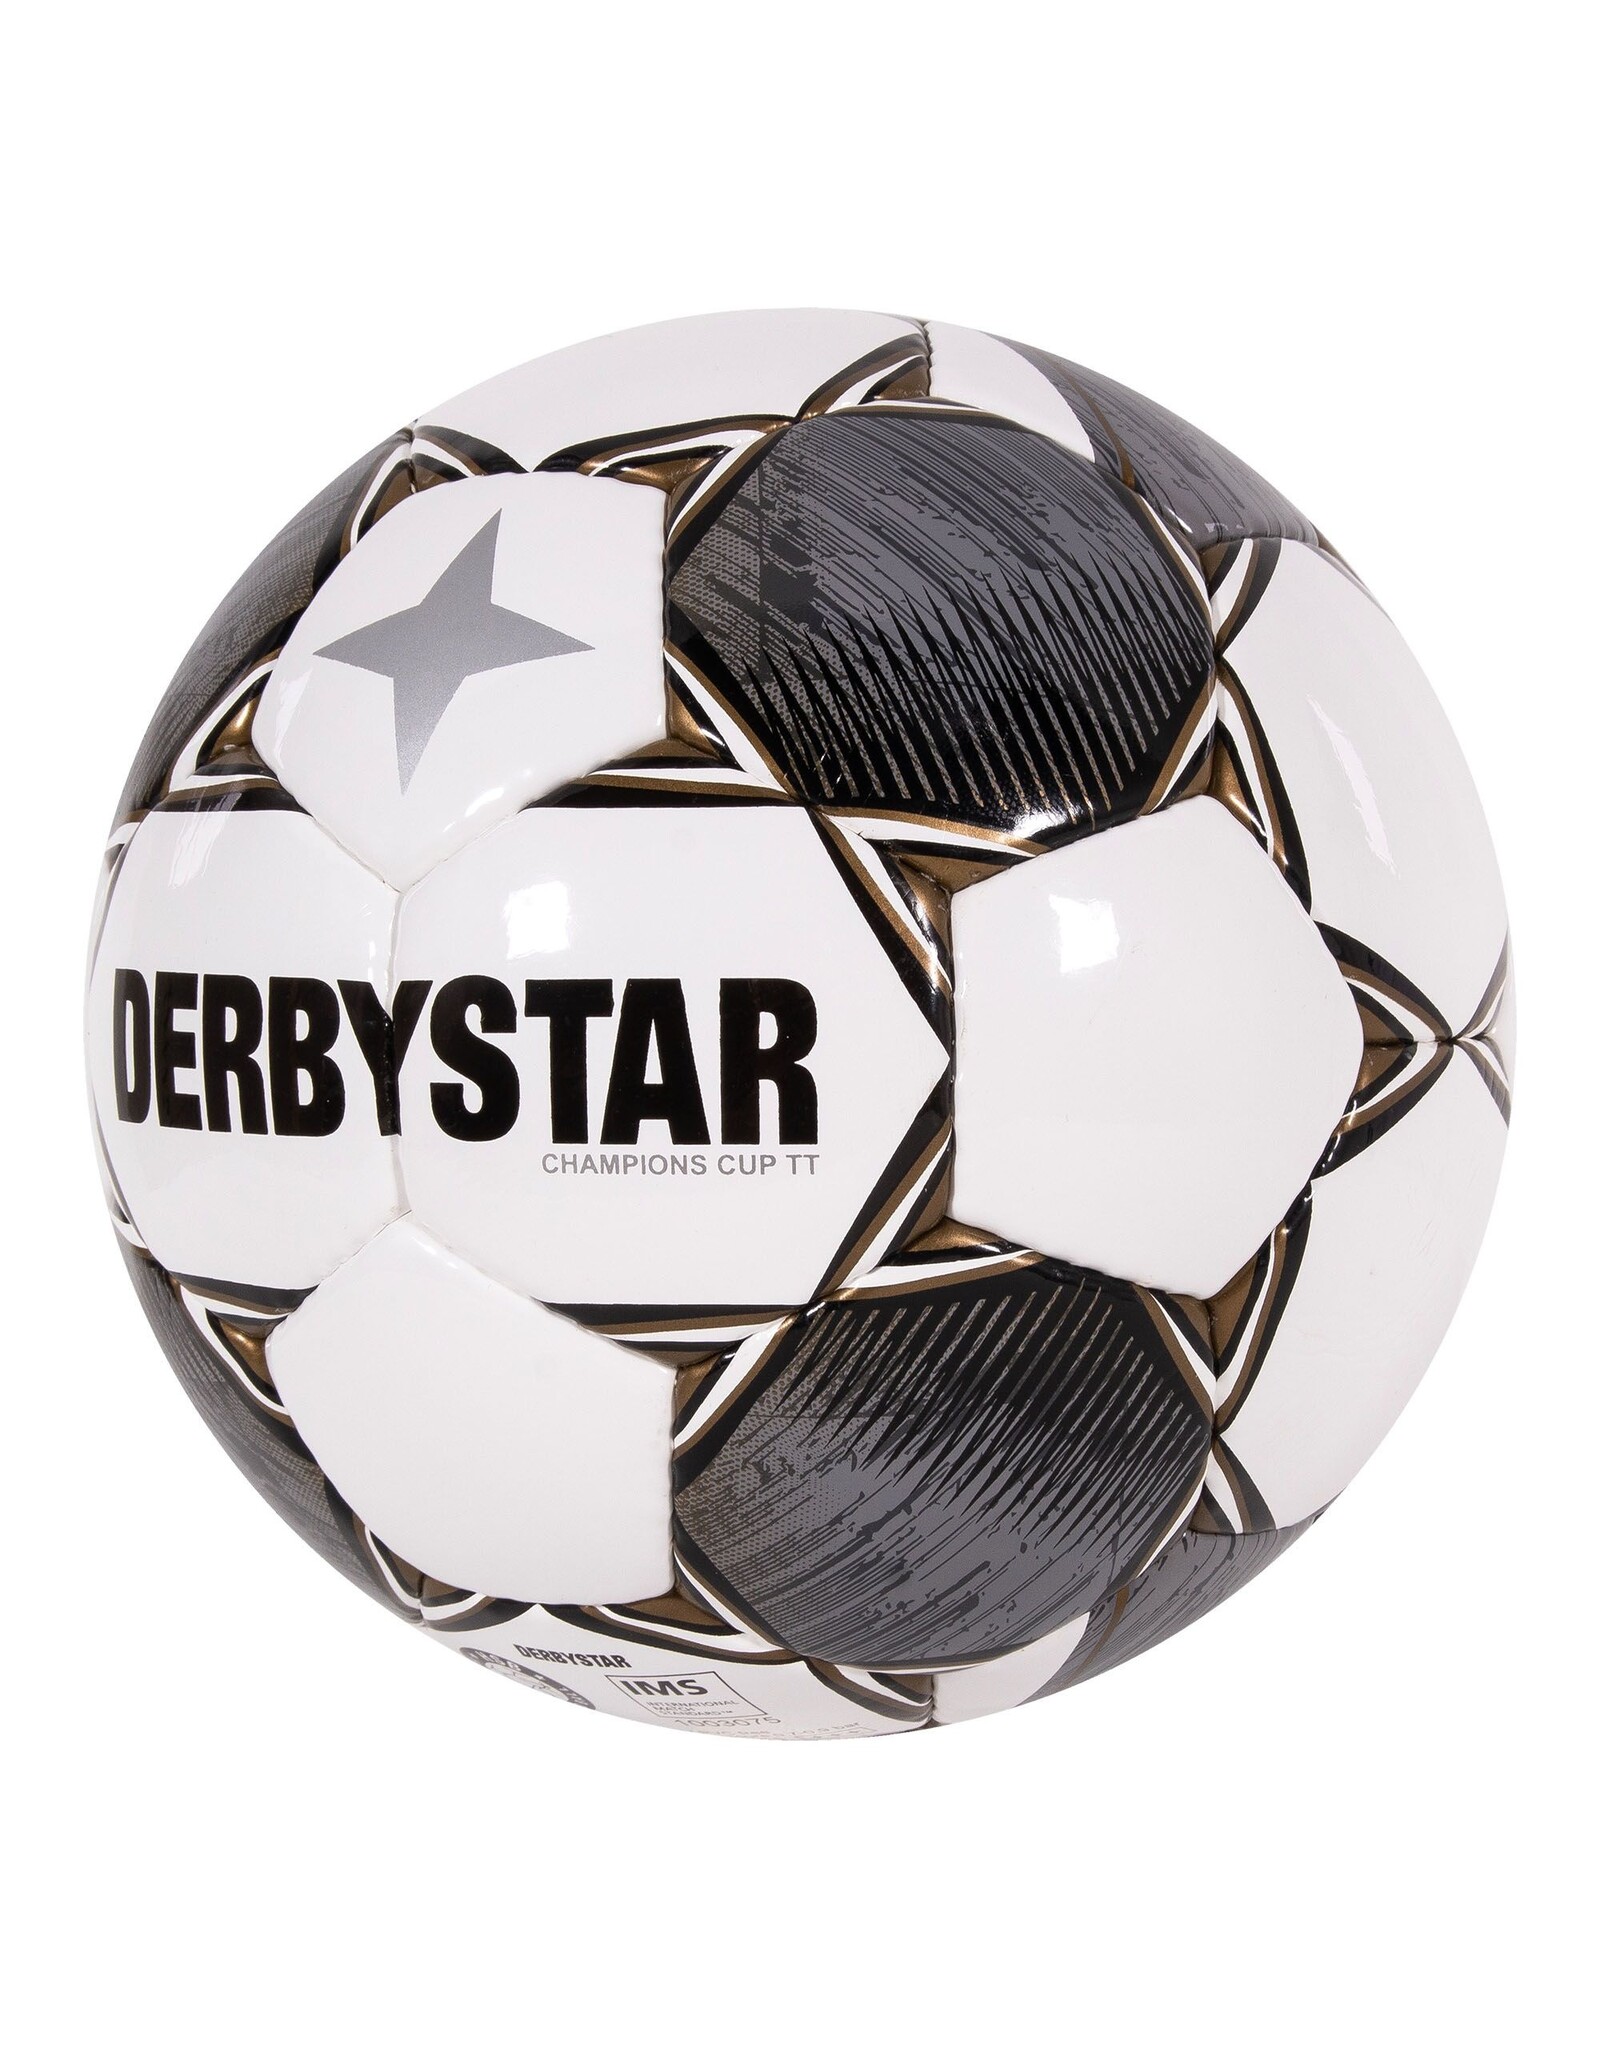 Derbystar Champions Cup II-White-Black